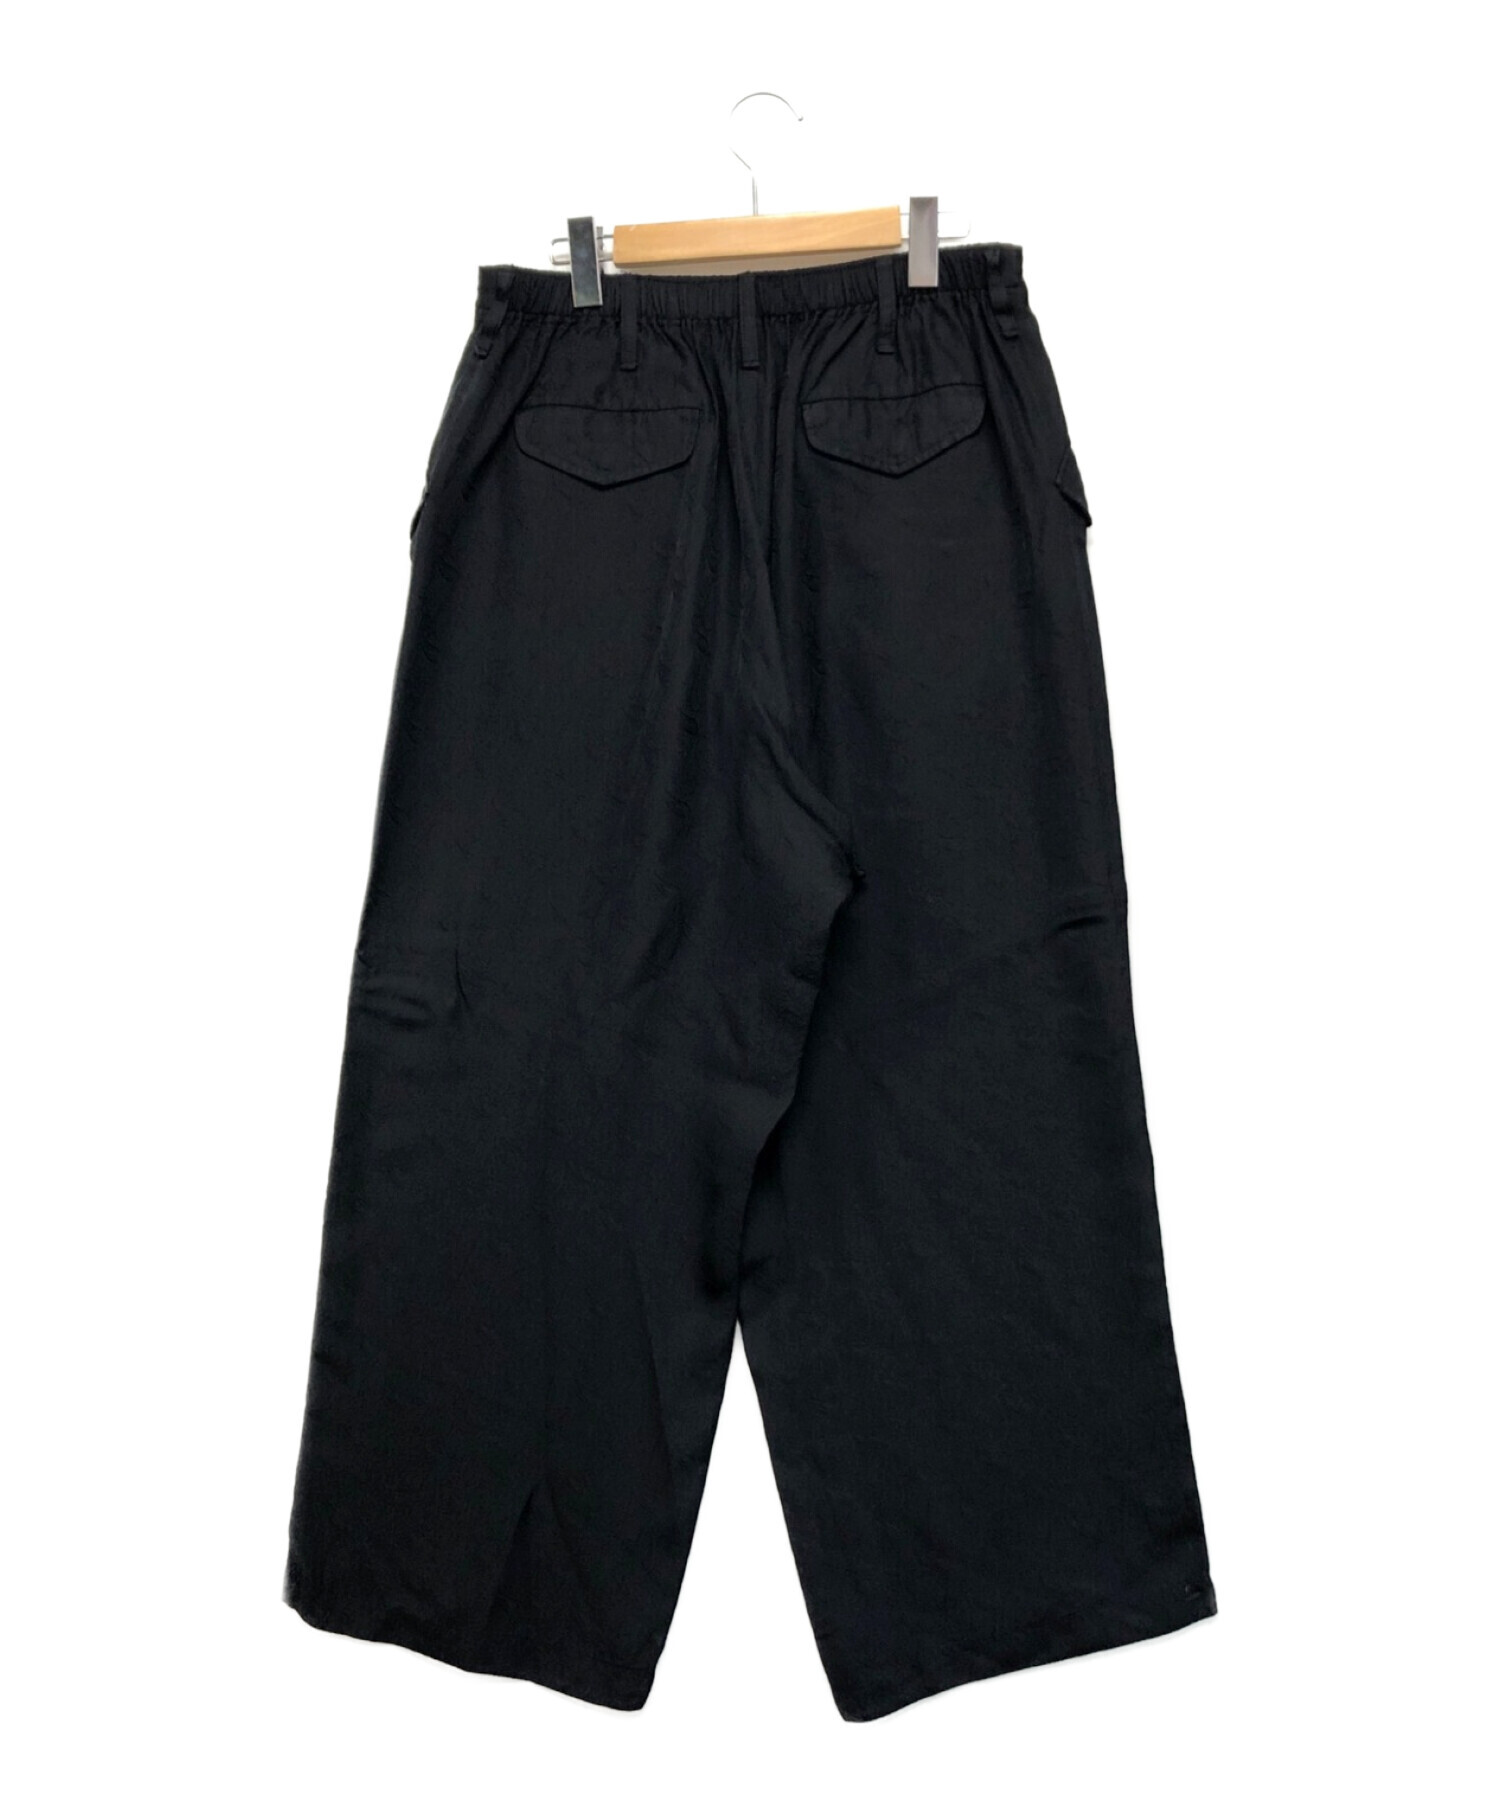 TOGA VIRILIS (トーガ ビリリース) Cupra paisley jacquard pants ブラック サイズ:SIZE 48